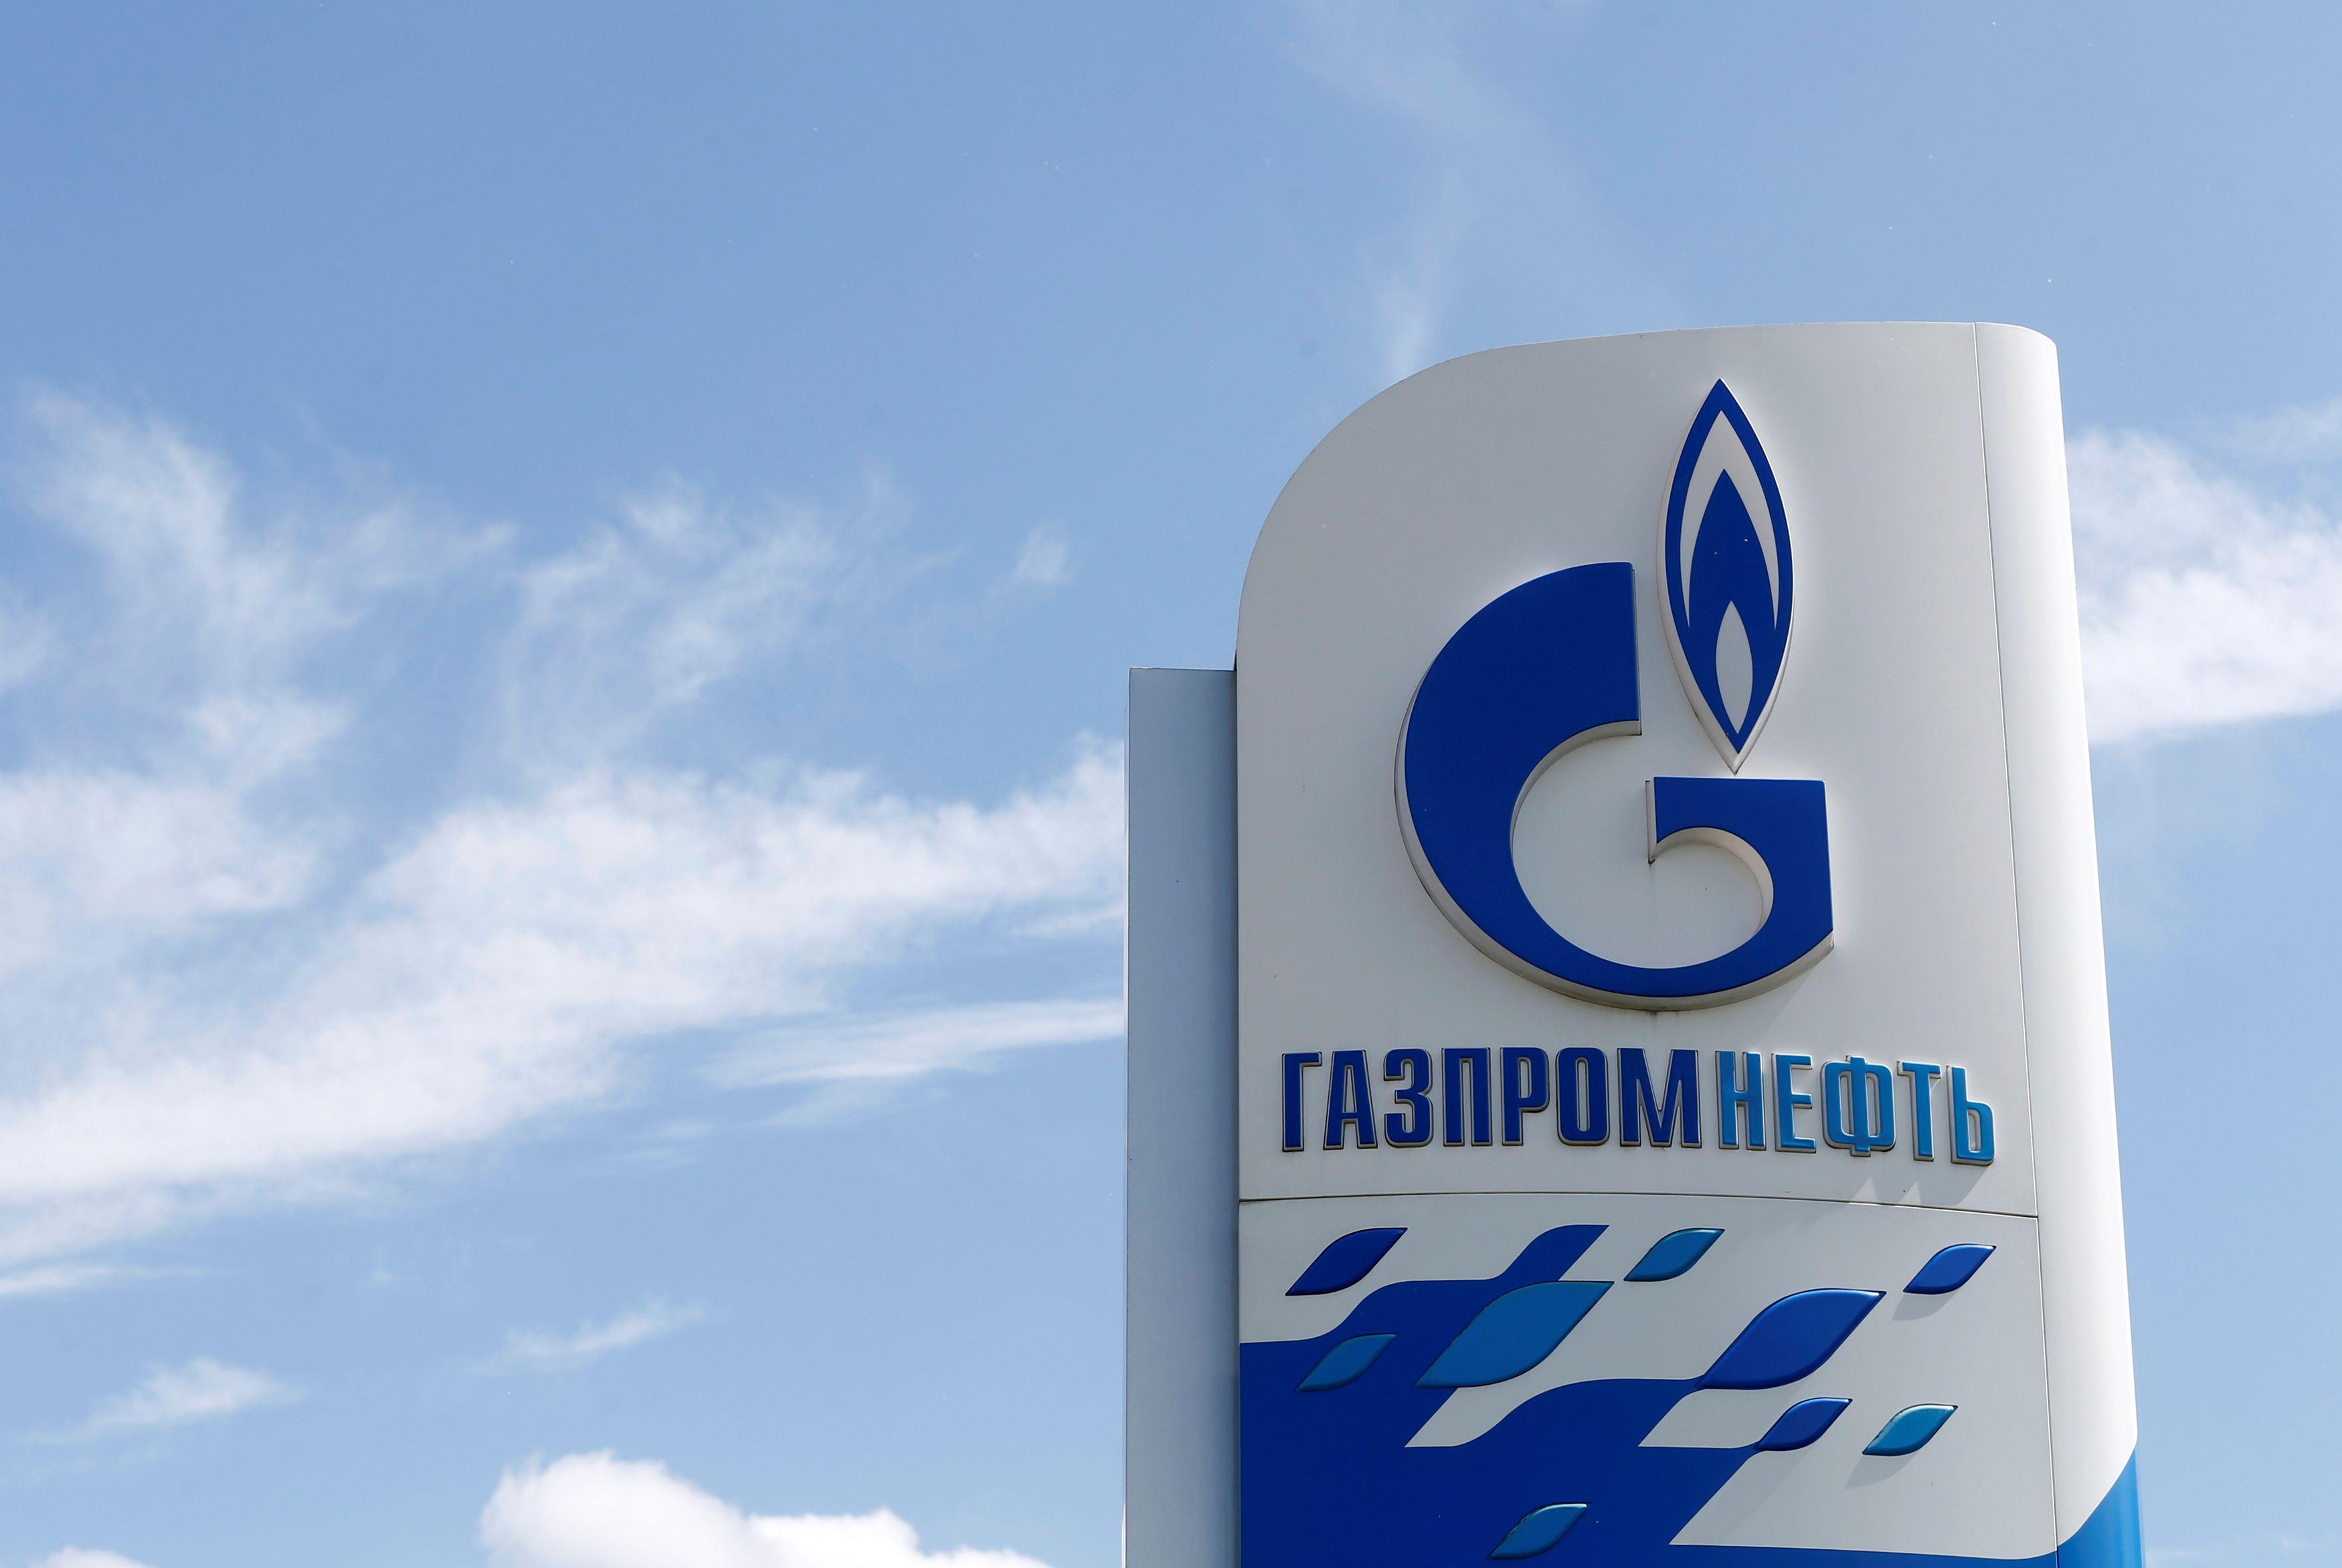 Gazprom Logo - Board with Gazprom Neft oil company logo is on display in Moscow ...